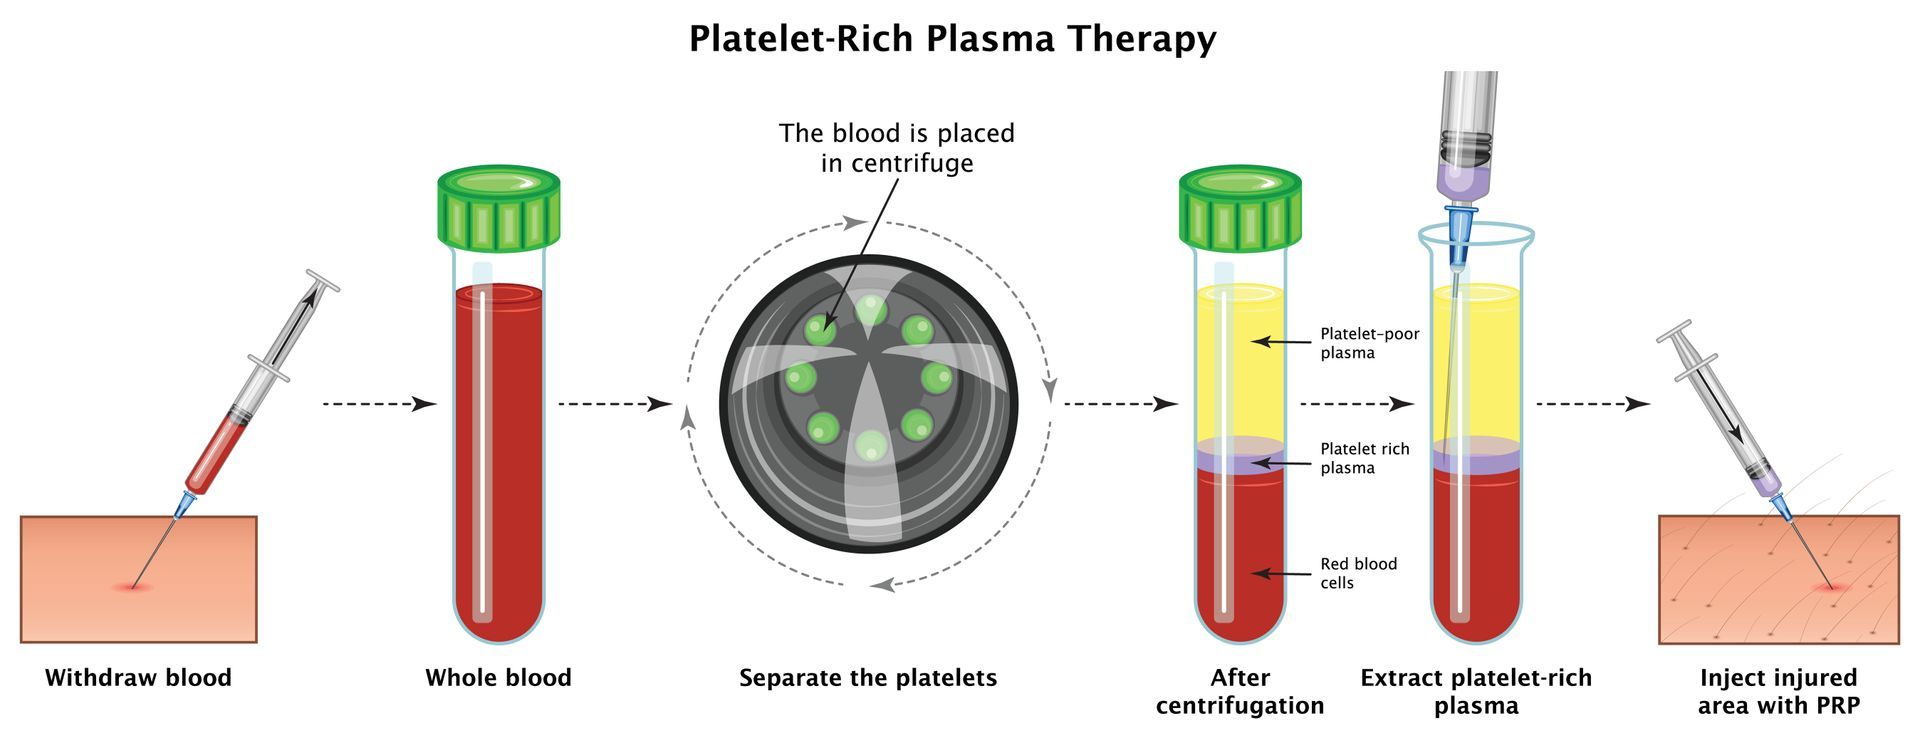 Platelet-Rich Plasma Therapy